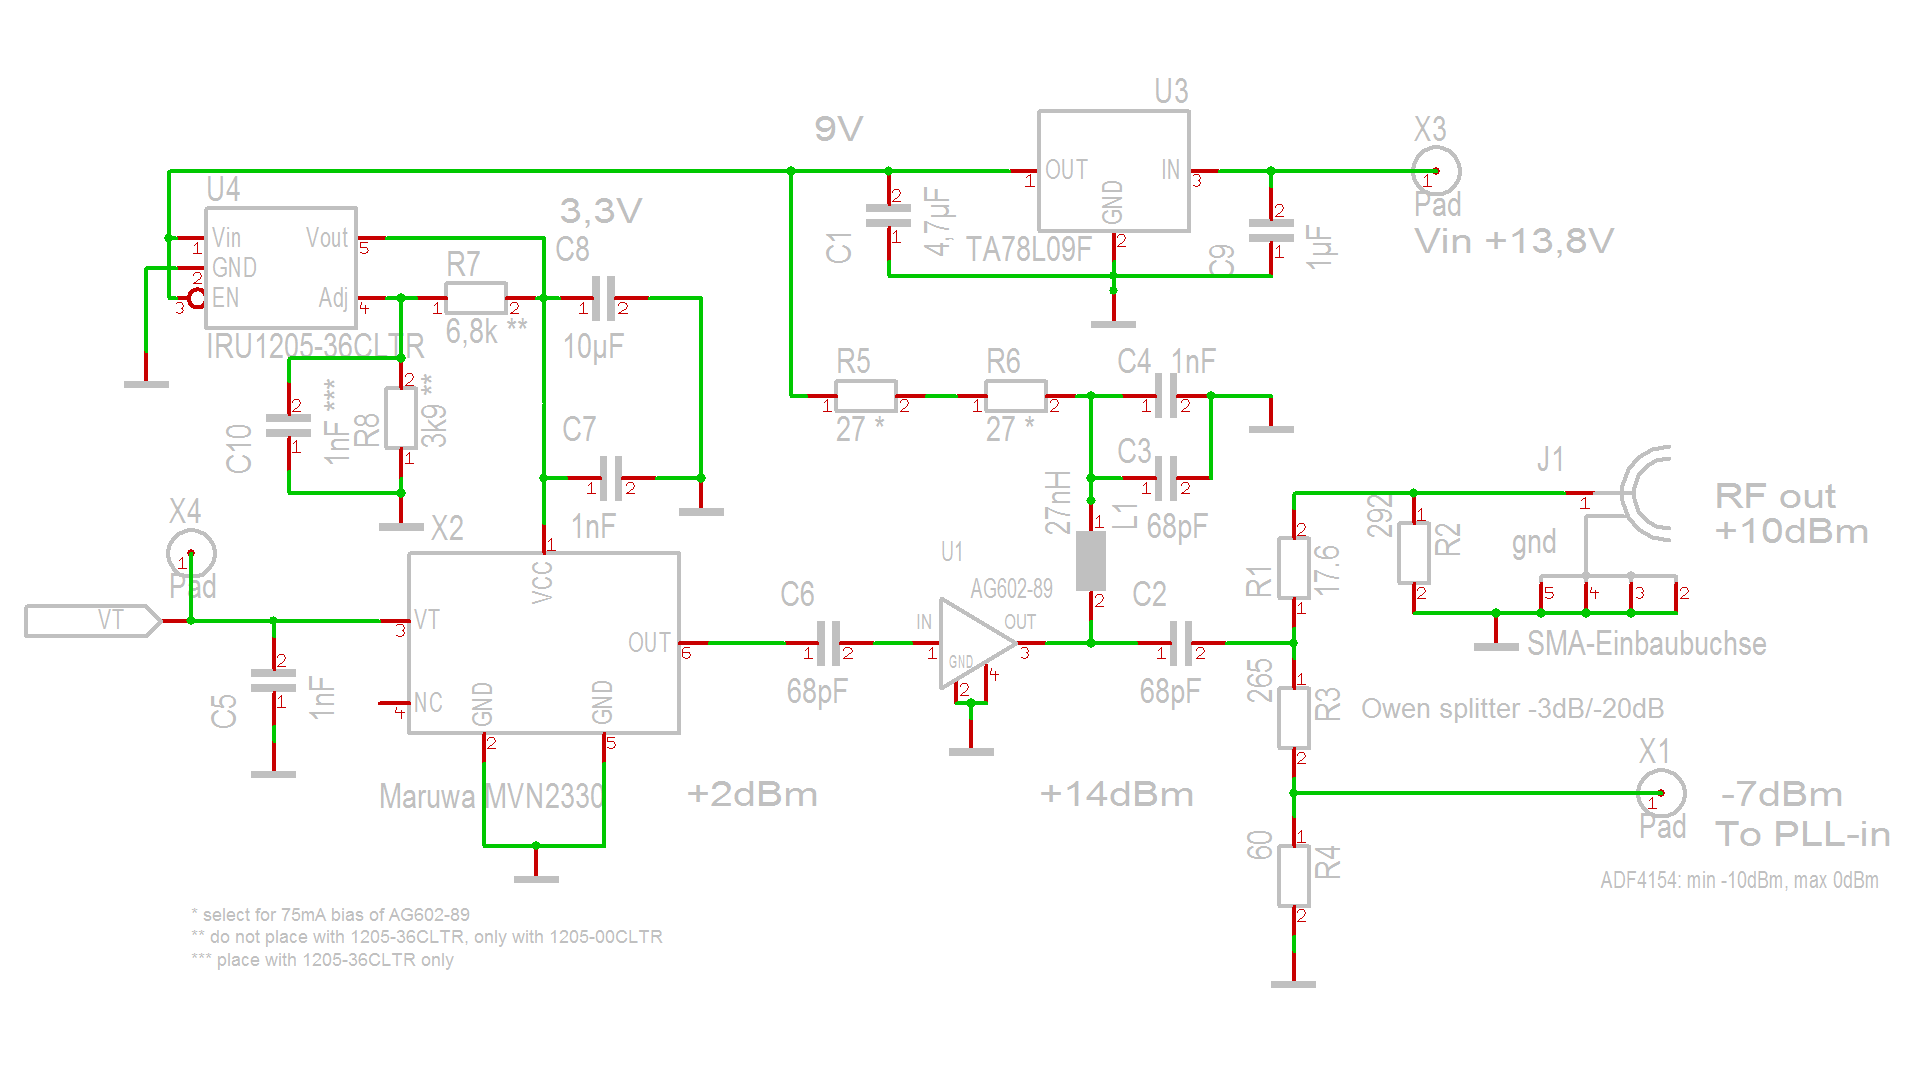 Maruwa MVN2330 VCO board schematic